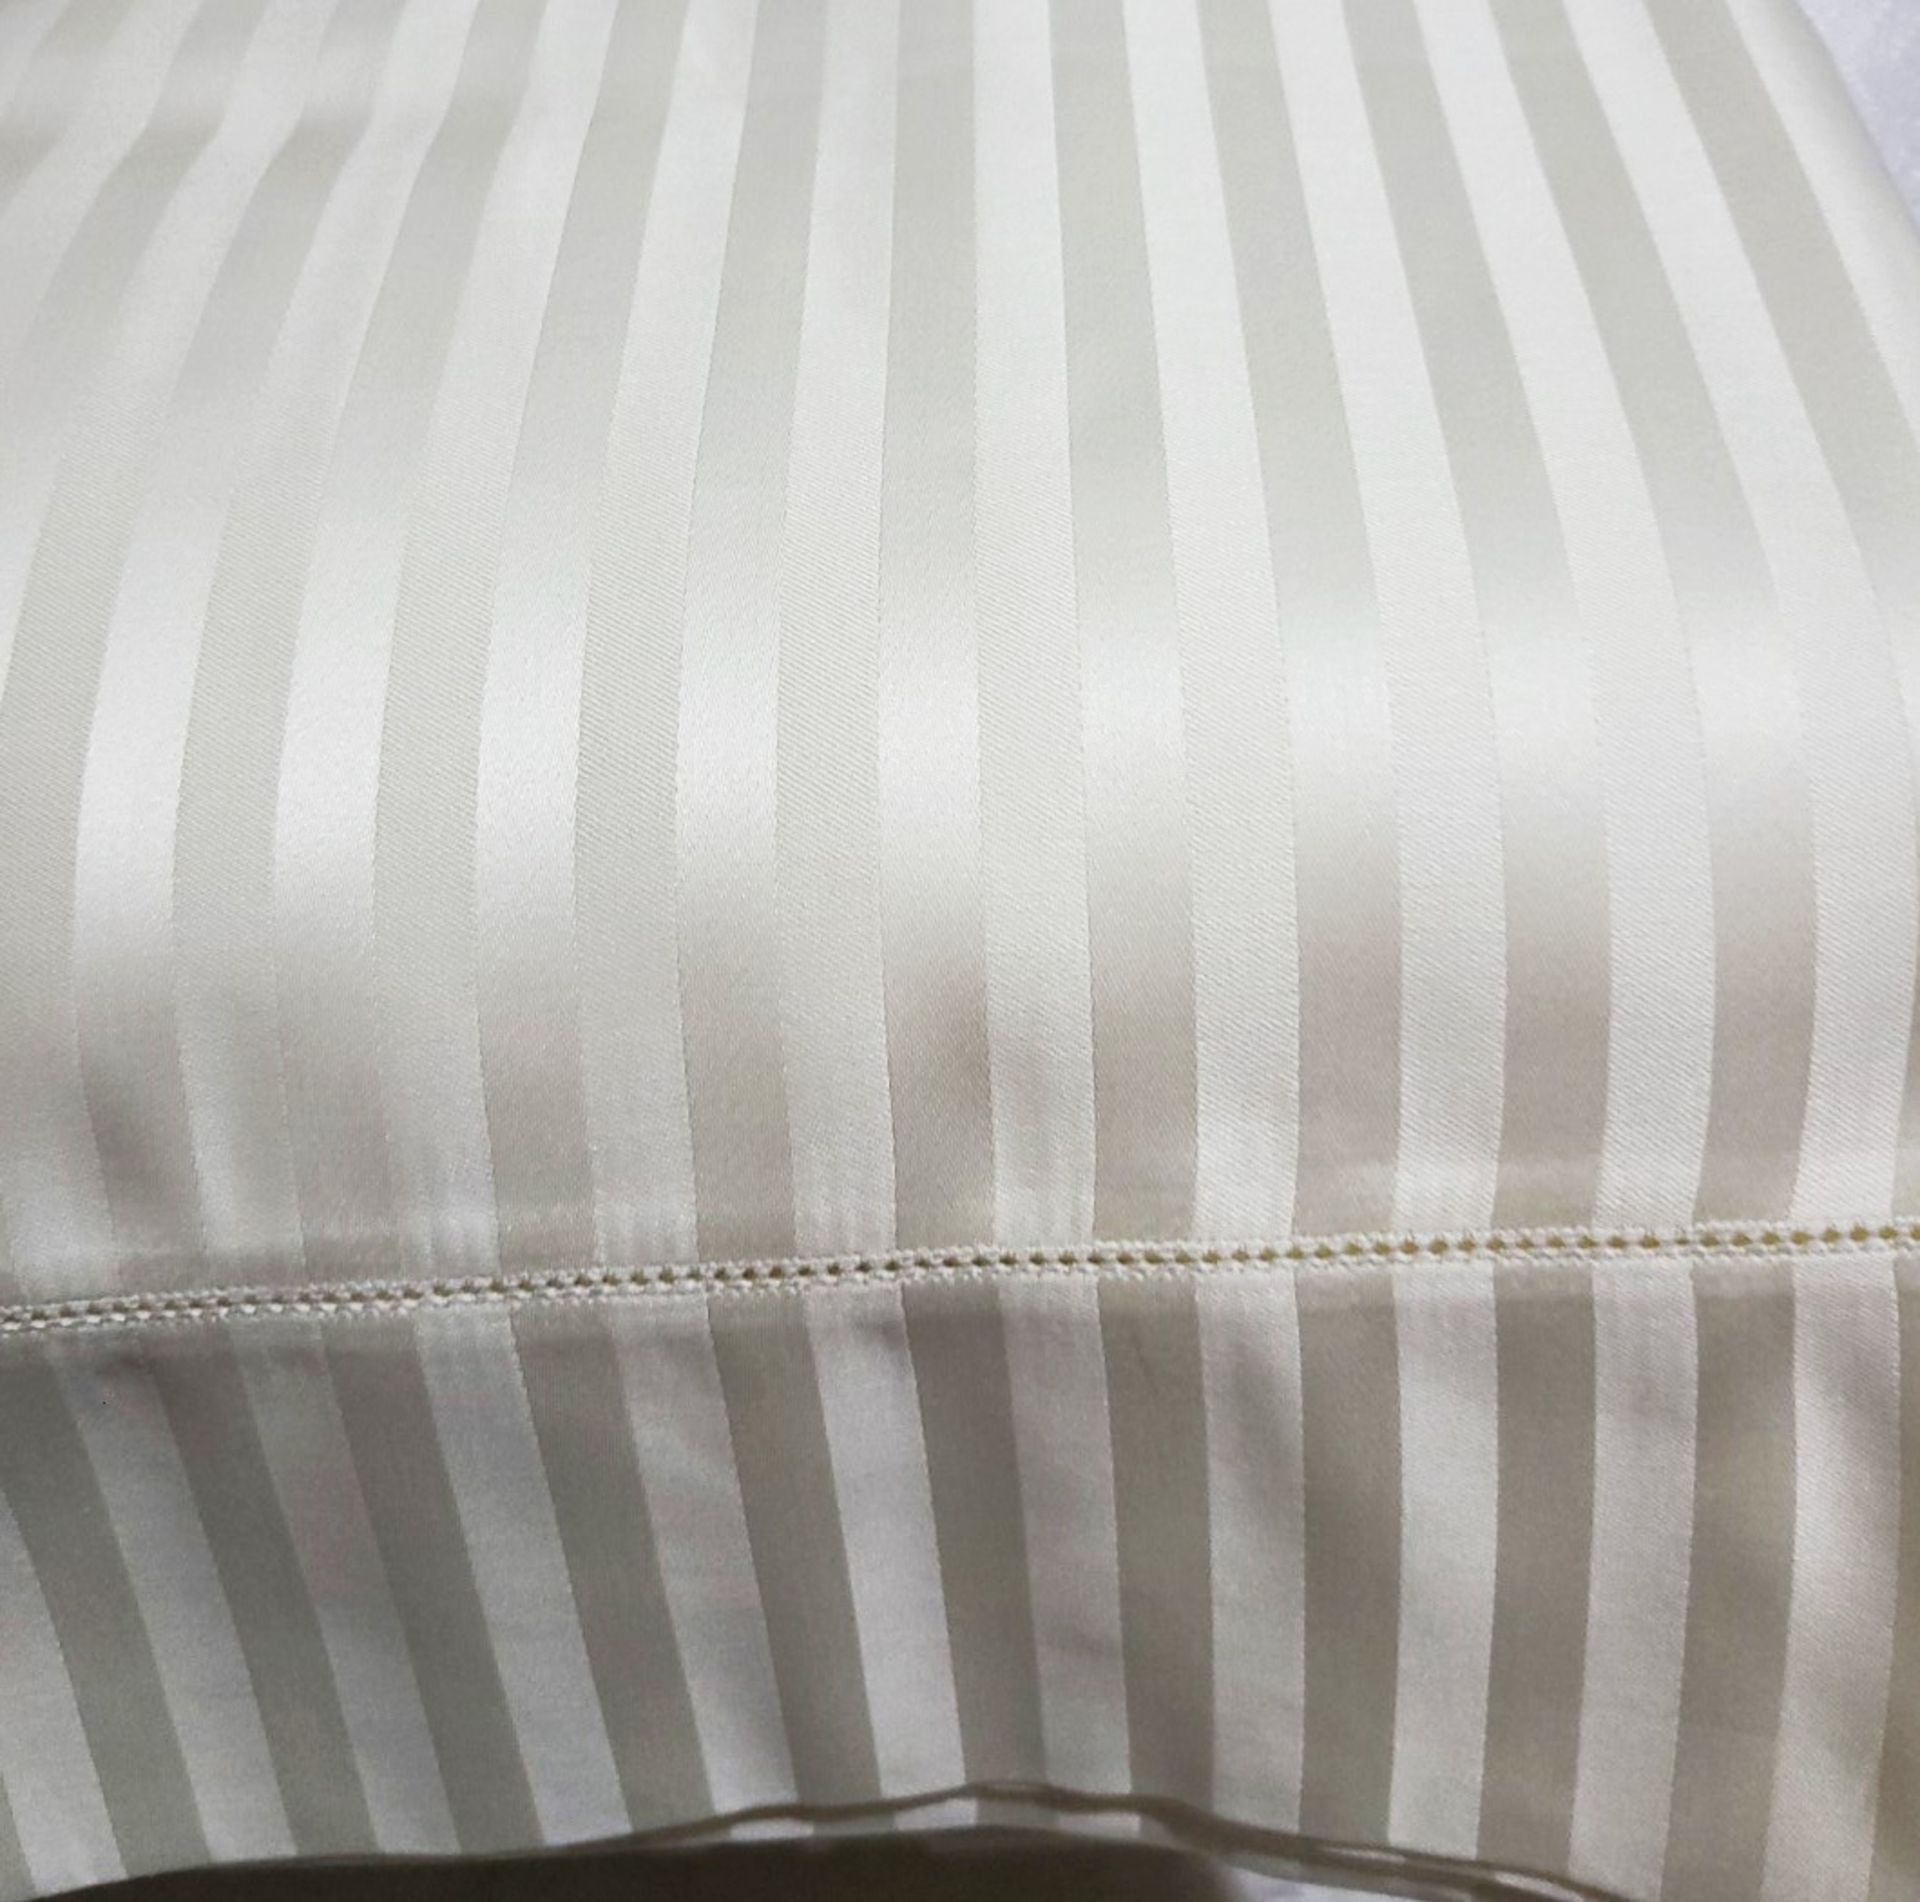 Pair Of PRATESI 'Raso Rigato' Luxury Italian Satin Pillow Shams In Off-White - RRP 50x75cm - £650.00 - Image 4 of 4